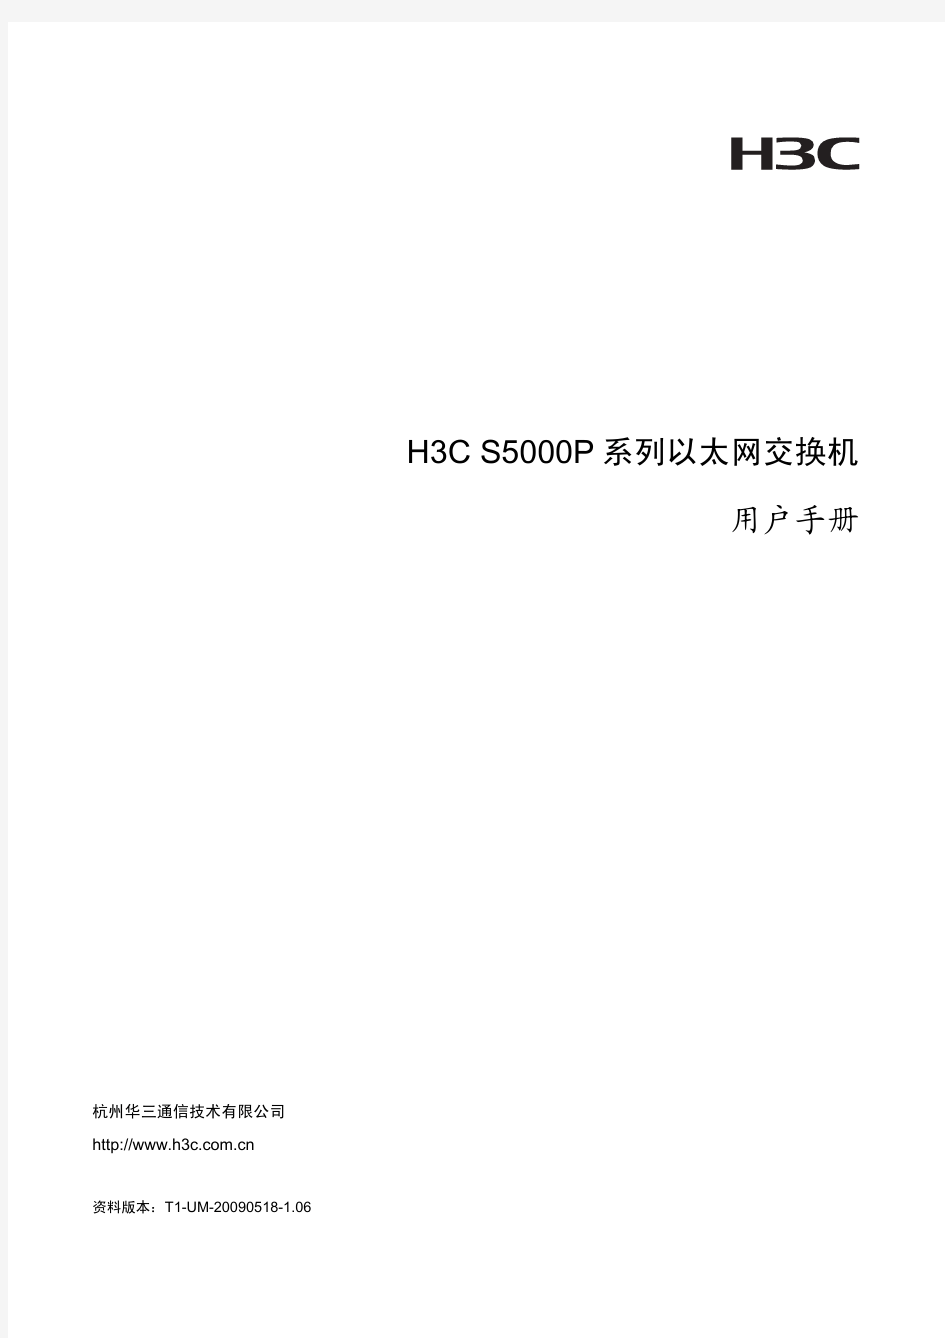 H3C S5000P用户手册